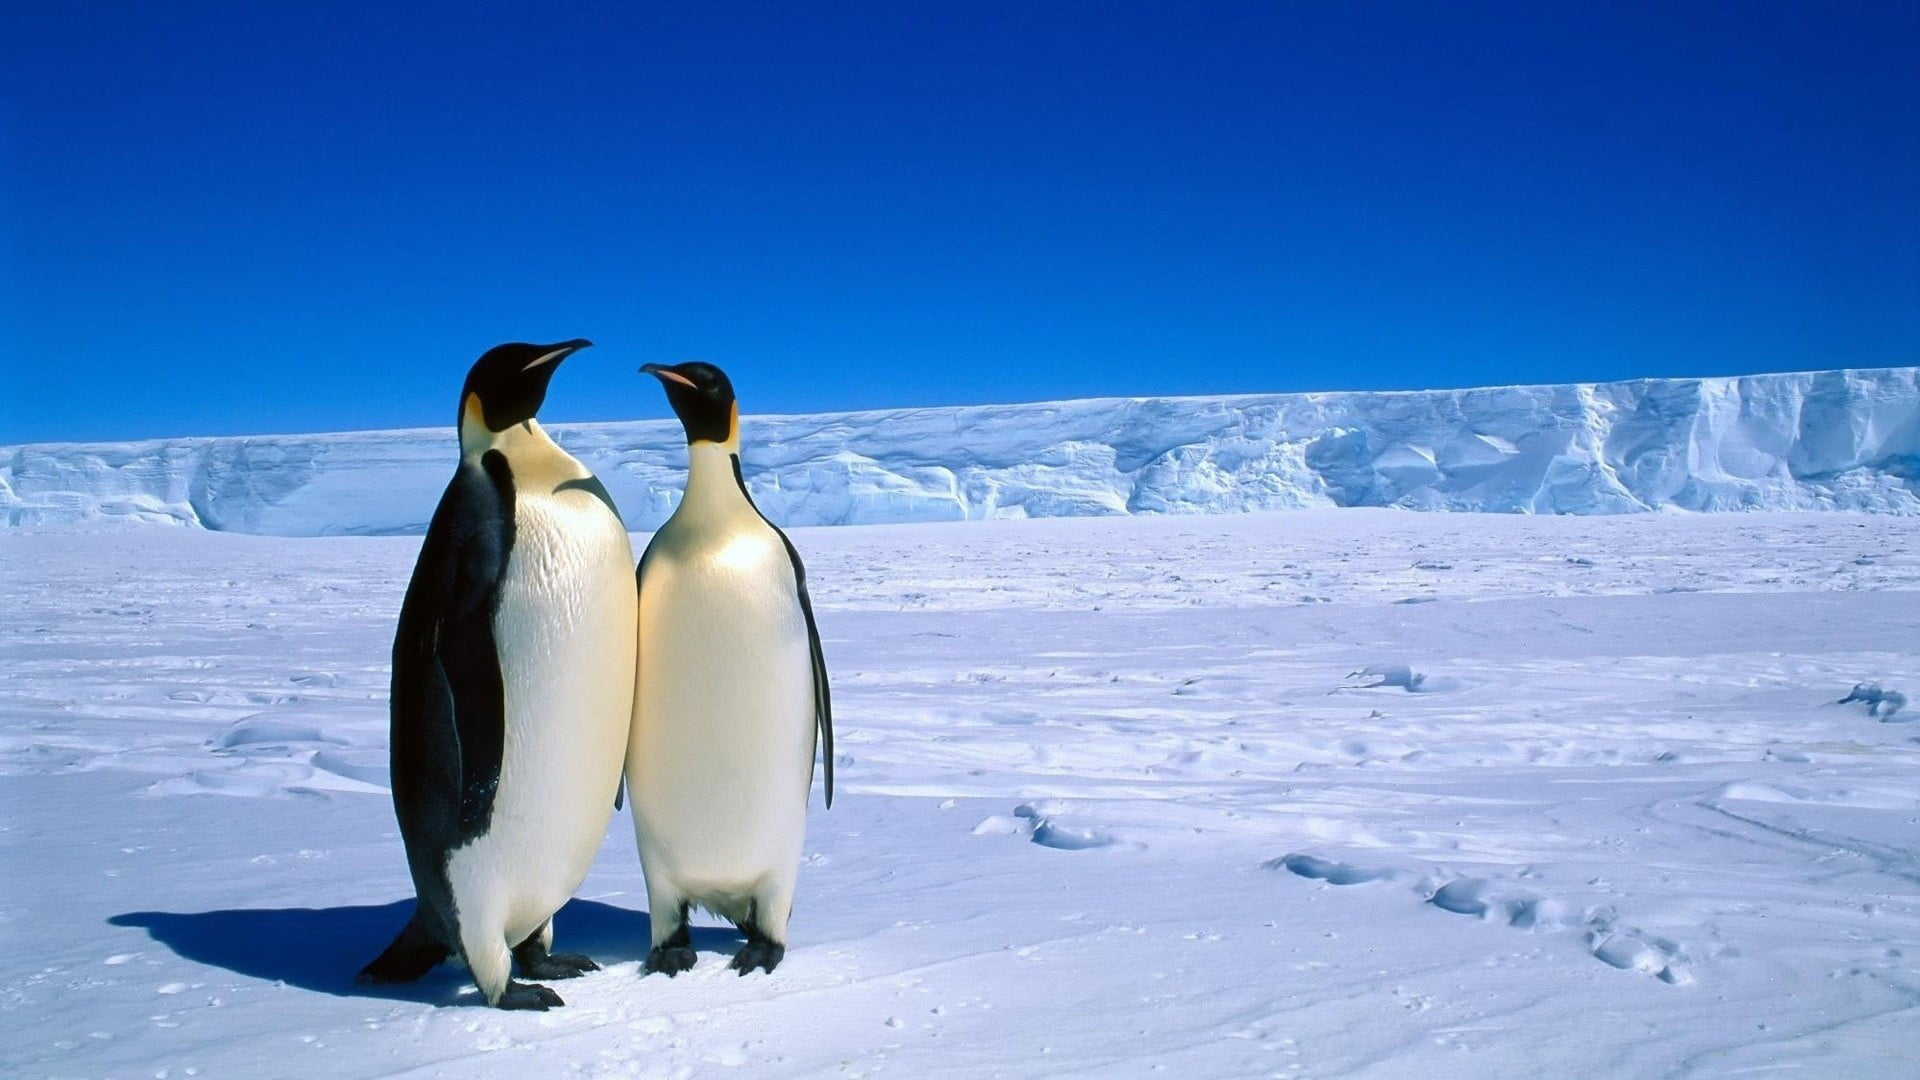 penguins, snow, birds, animals, nature, landscape, cold temperature